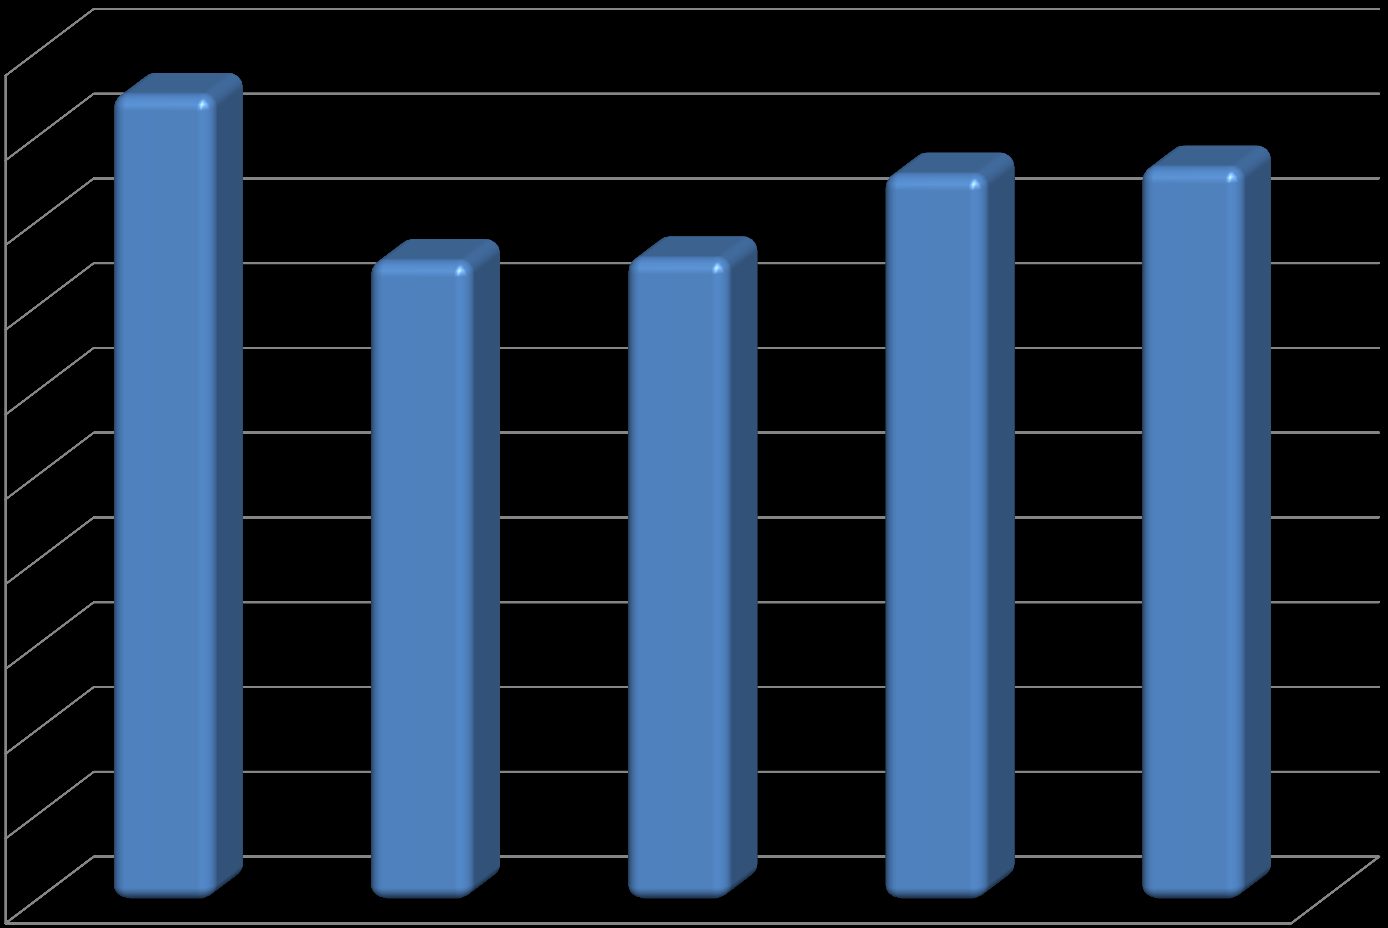 Toneladas de Melaza Producción Nacional de Miel Final (Melazas) de 2008-2012 2,000,000 1,800,000 1,600,000 1,904,784 1,512,491 1,519,096